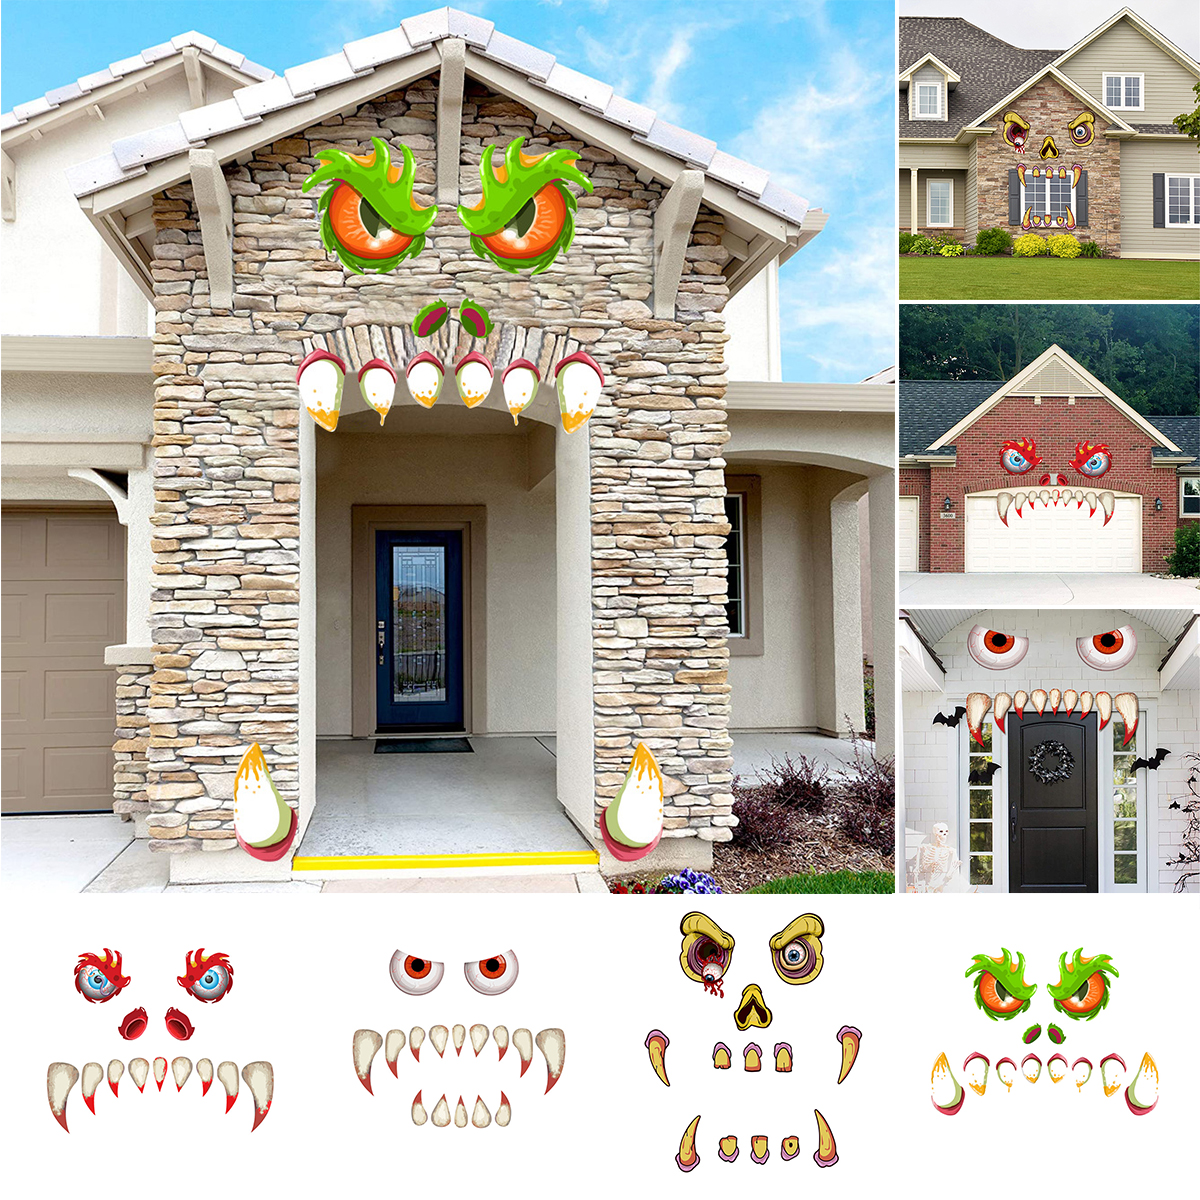 Halloween-Scary-Monster-Face-Devil-with-Eyes-Teeth-Cutouts-Combination-Sticker-Window-Gateway-Door-C-1795001-5